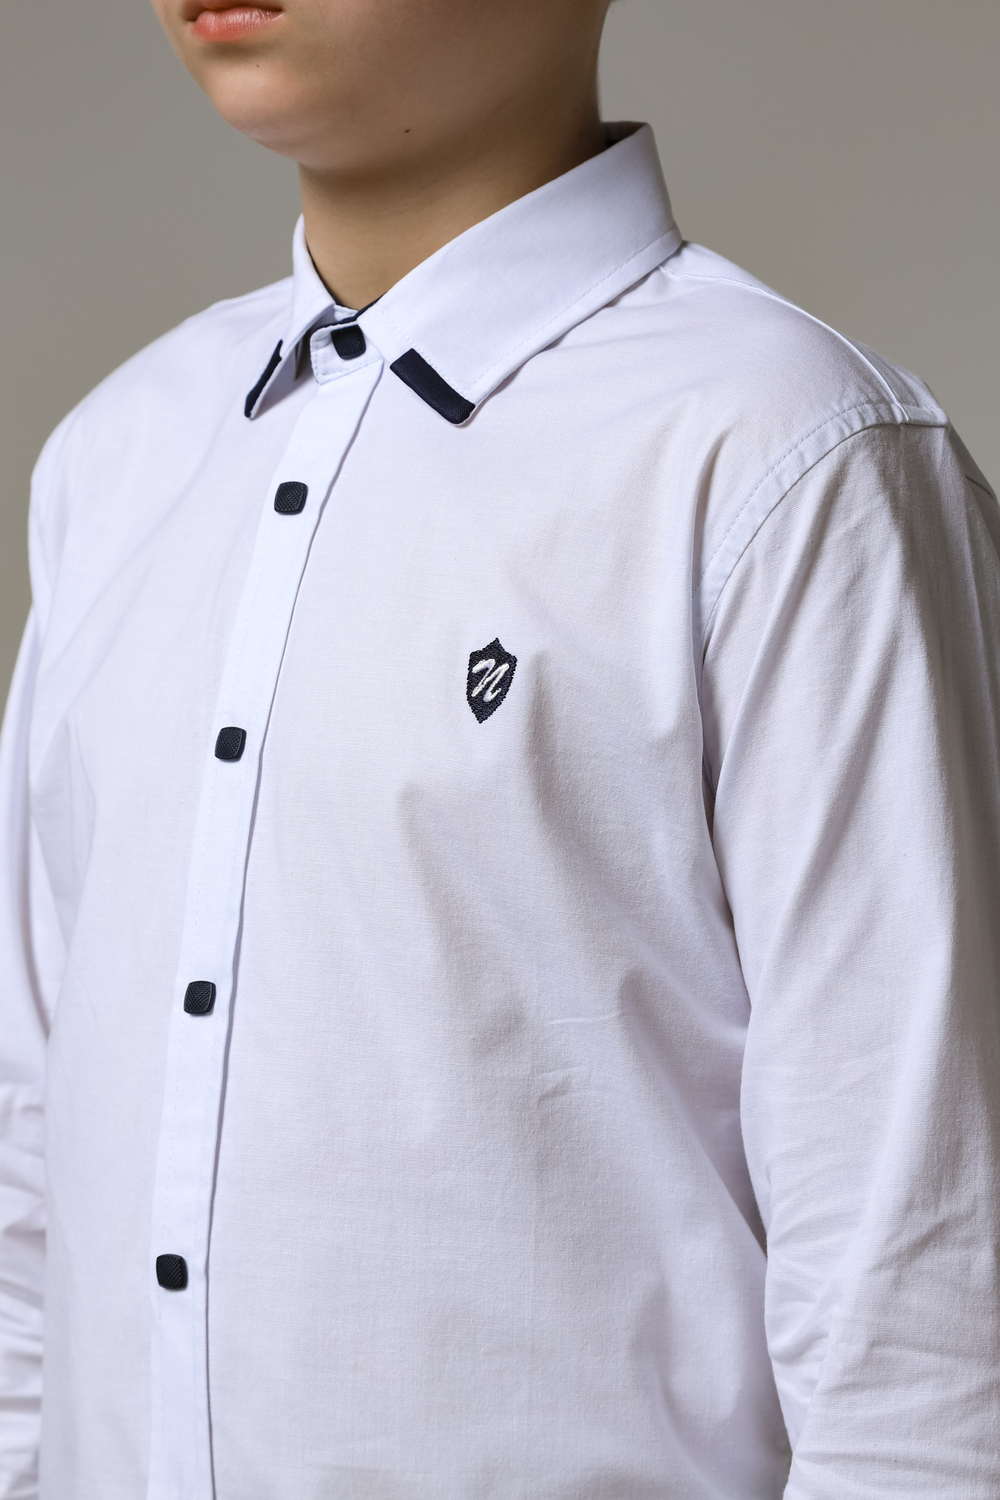 Рубашка длинный рукав на кнопках д/м NASJOY 1020